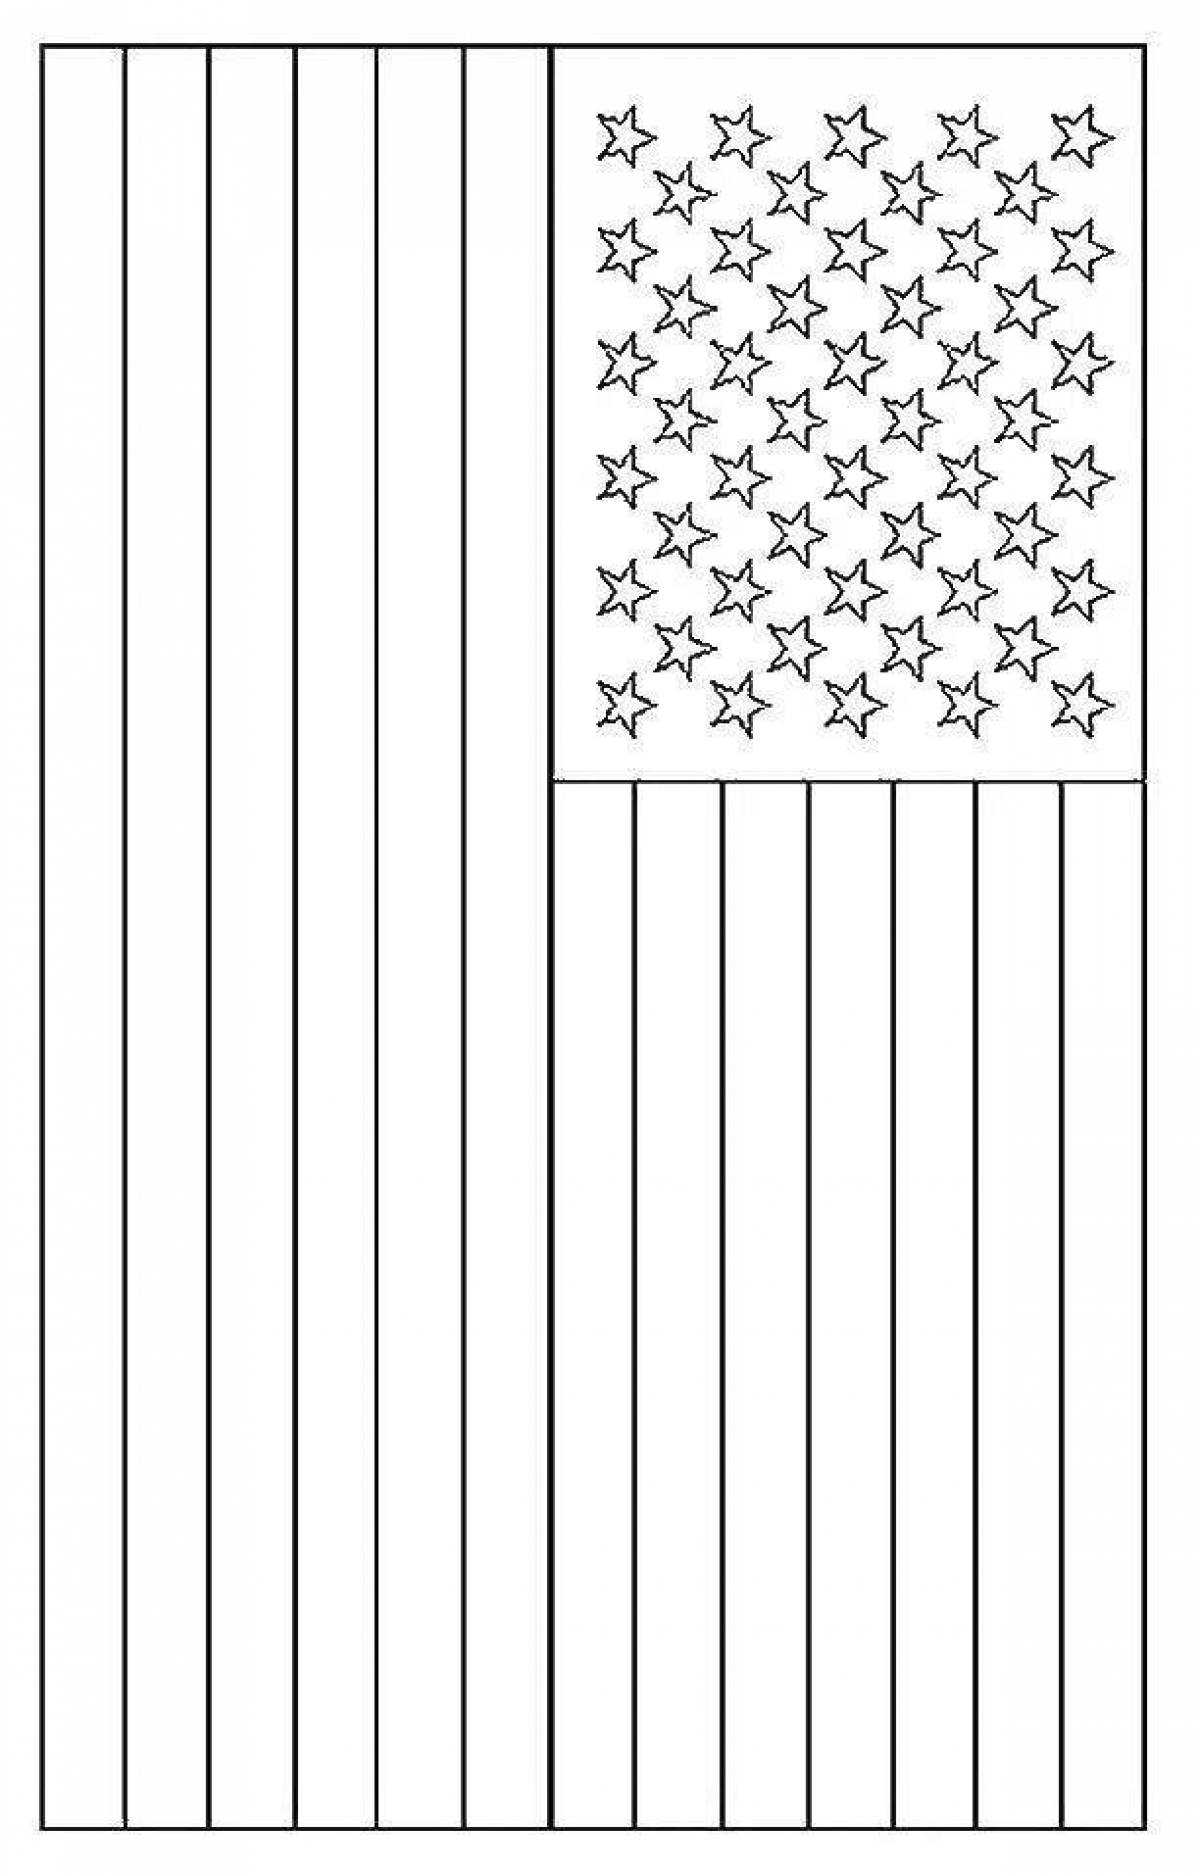 Usa flag vibrant coloring page